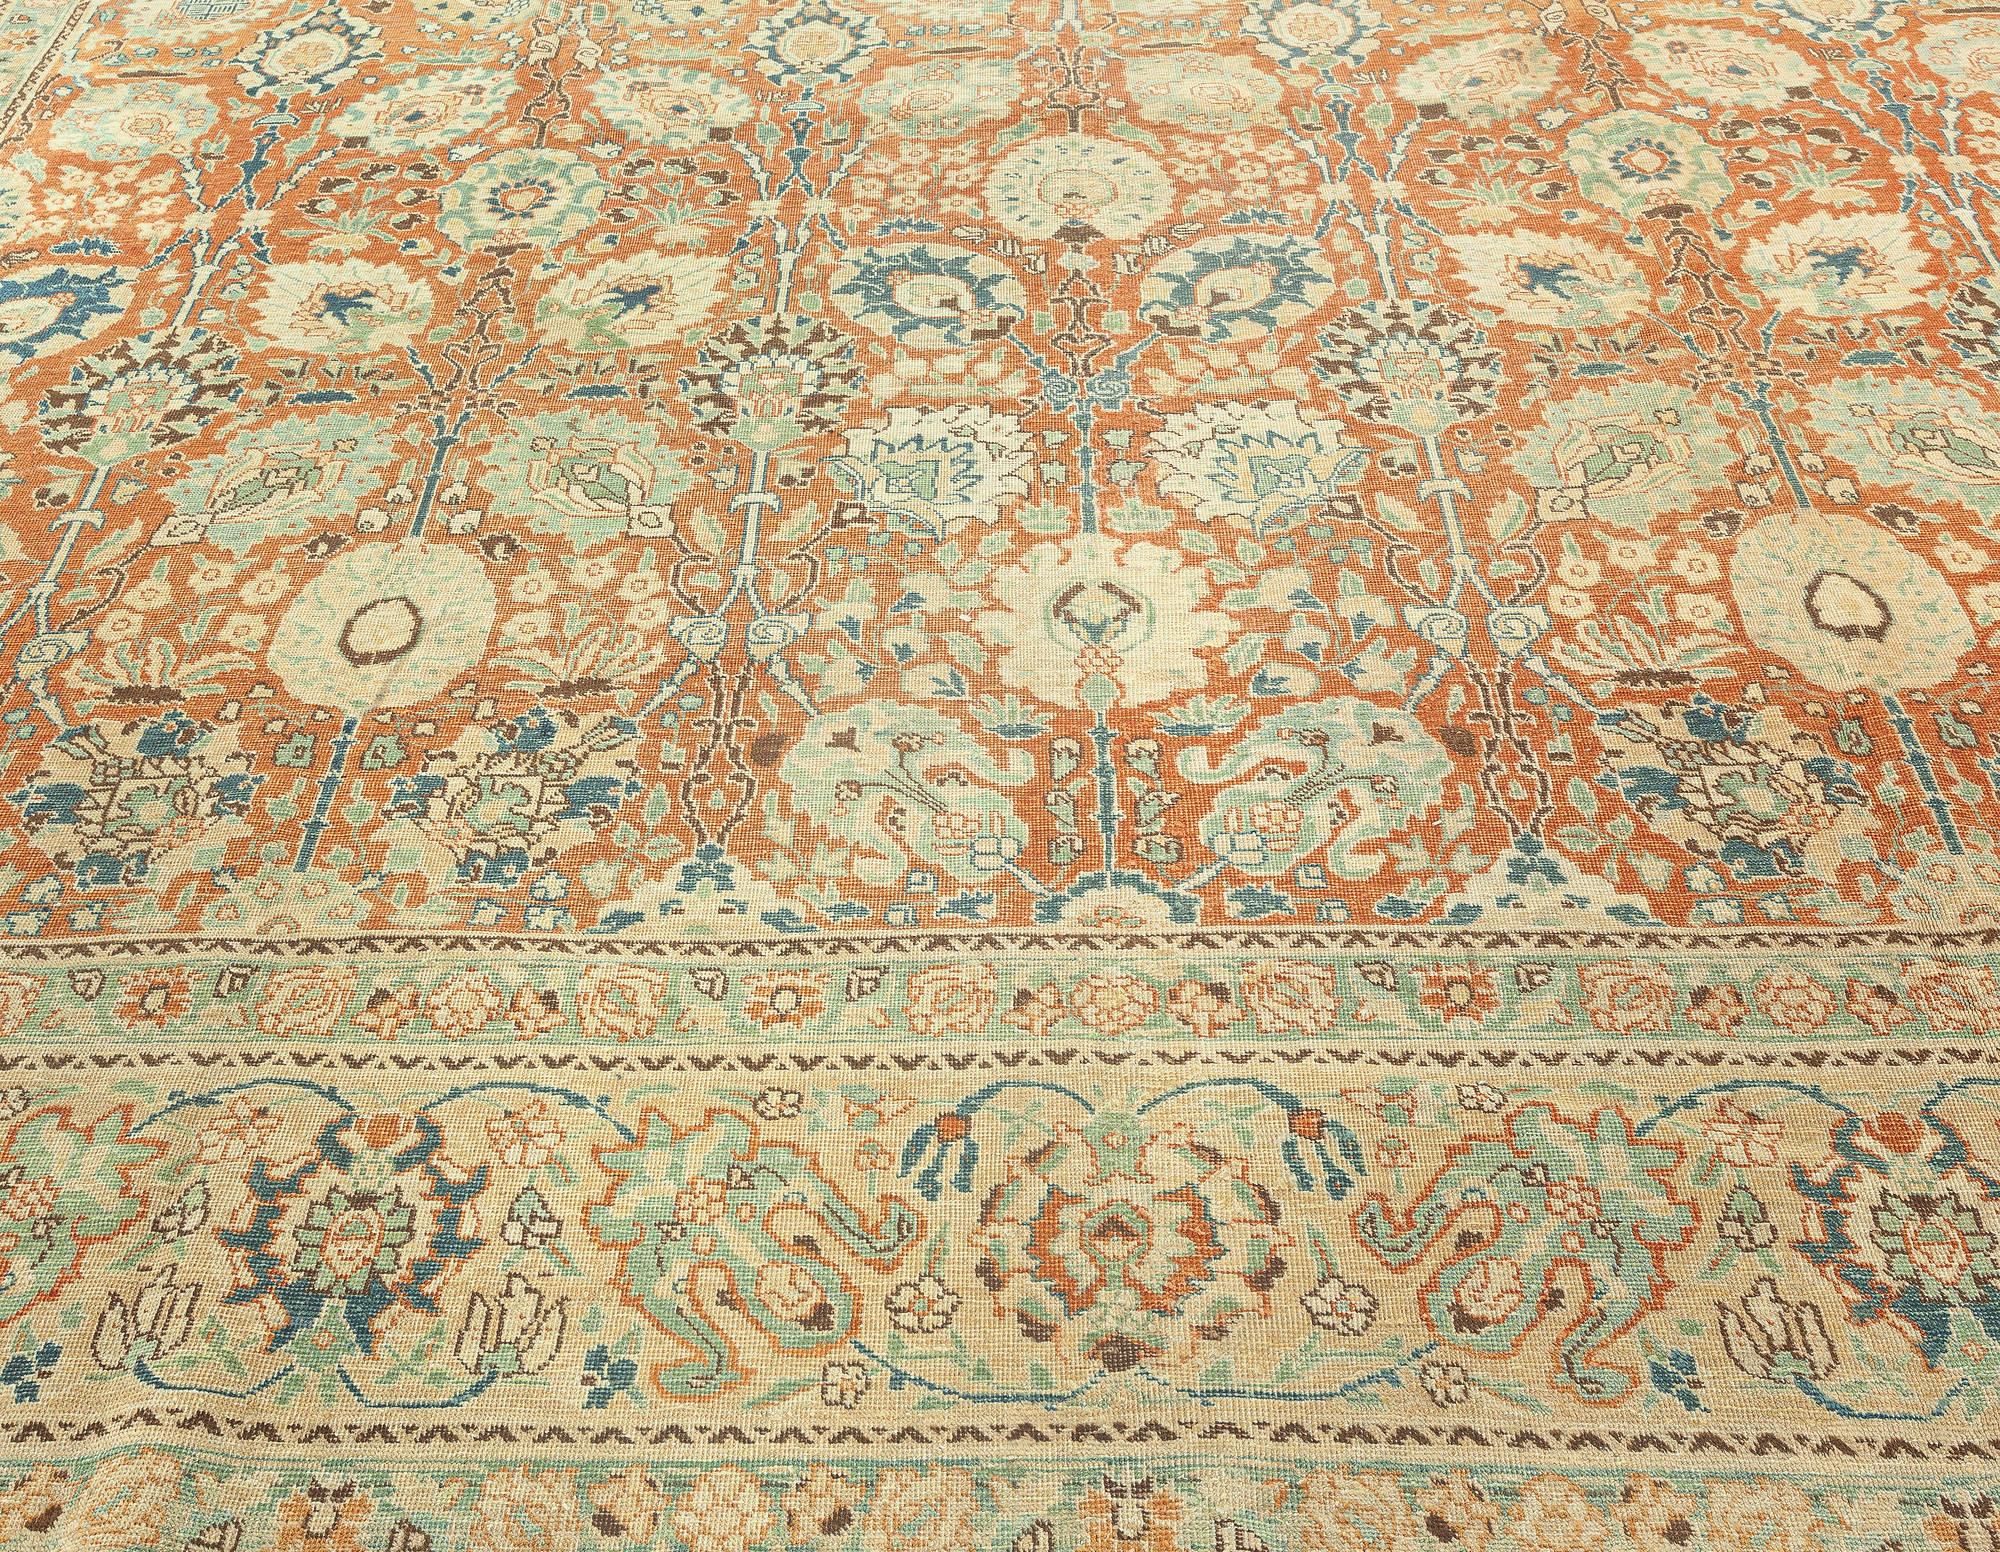 One-of-a-kind Antique Persian Tabriz botanic rug
Size: 10'9